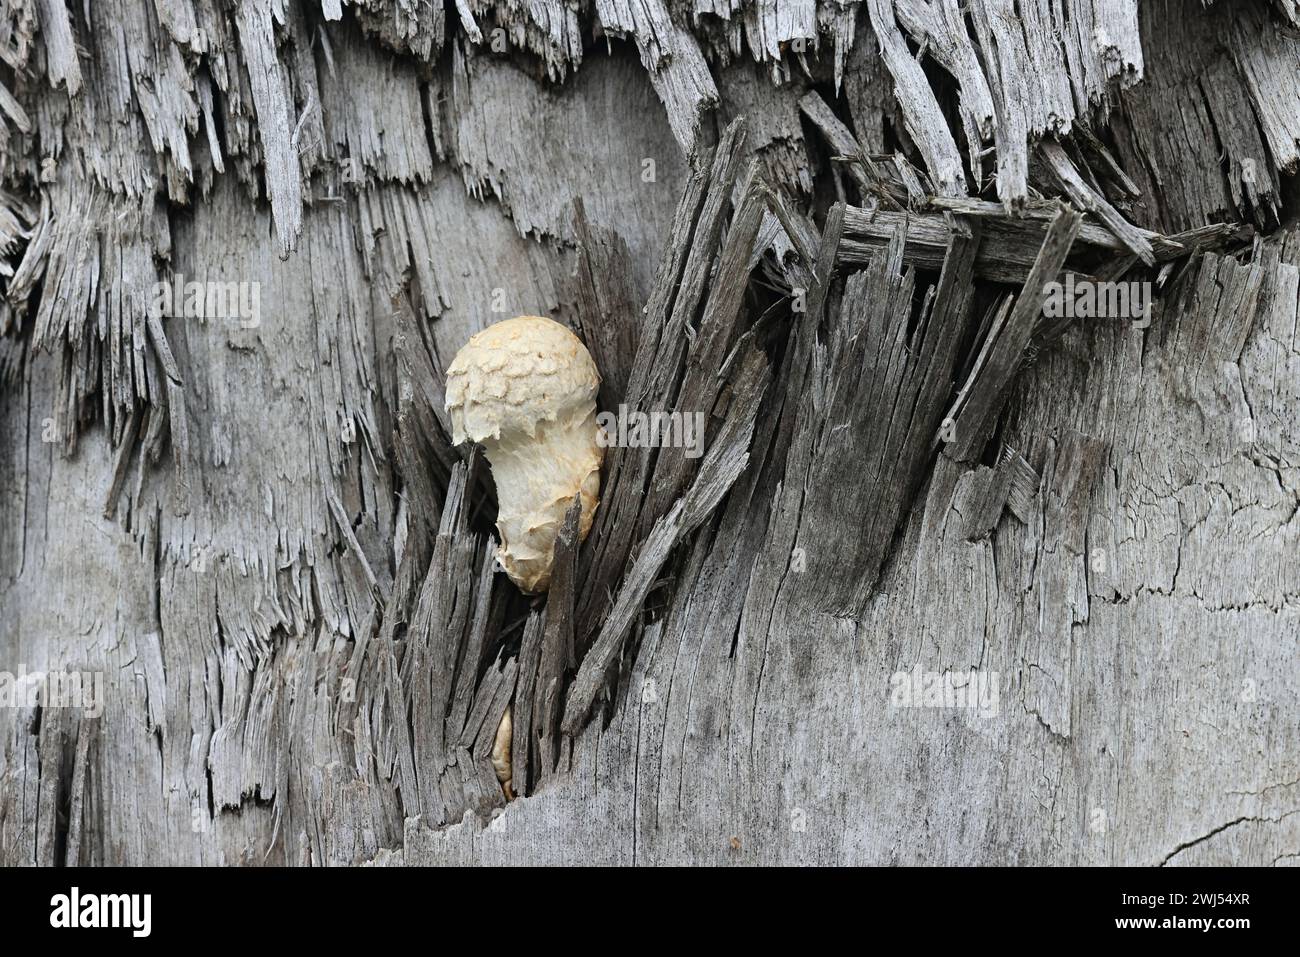 Hemipholiota populnea, also known as Pholiota populnea, a scalycap mushrooms from Finland, no common english name Stock Photo